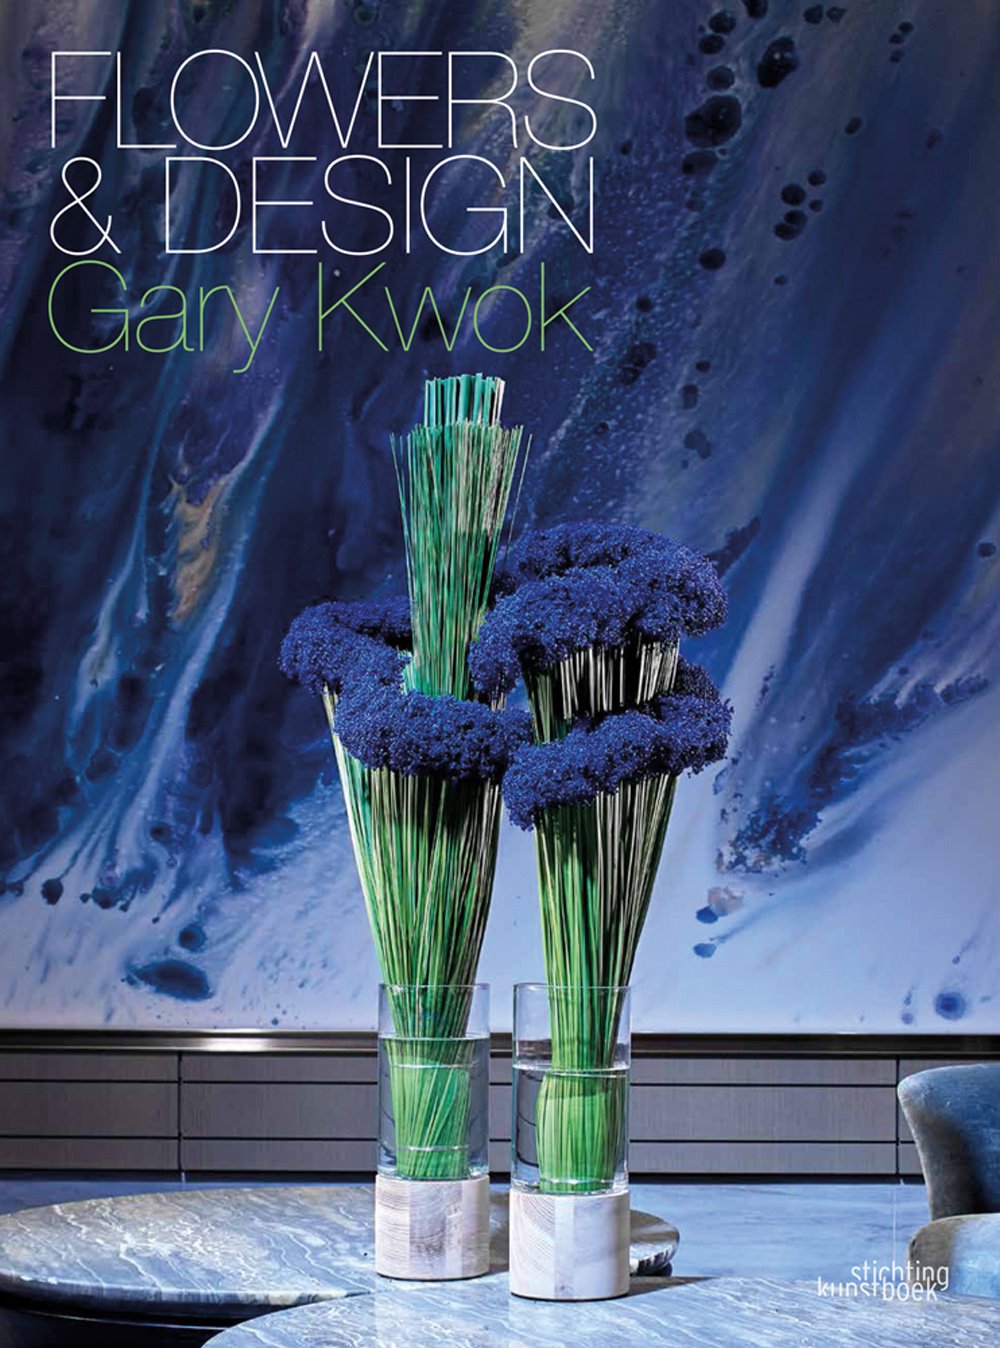 Flowers &amp; Design By Gary Kwok